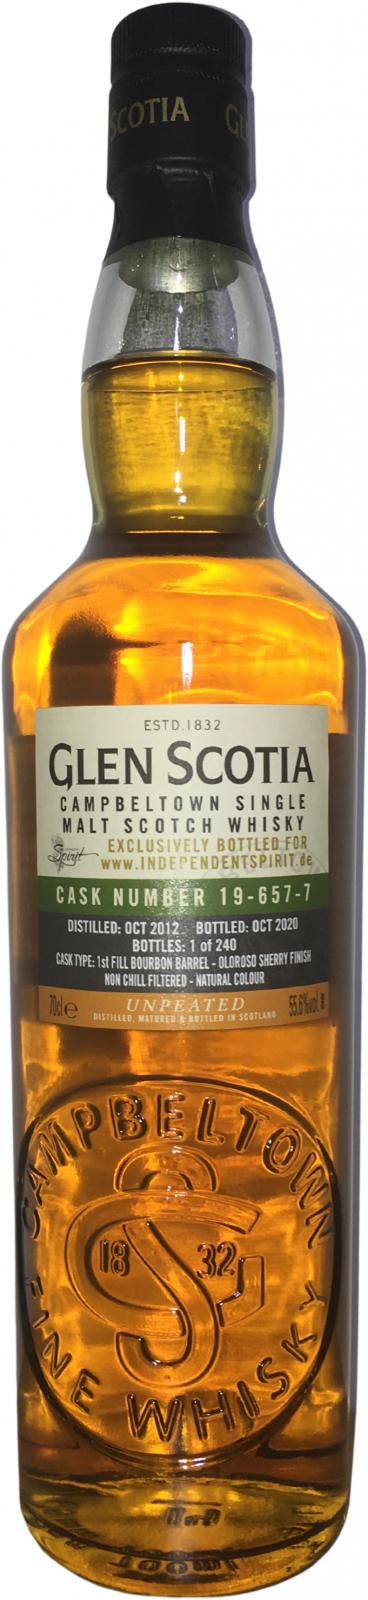 Glen Scotia 2012 Unpeated Oloroso Sherry Finish 19-657-7 independentspirit.de Exclusive 55.6% 700ml